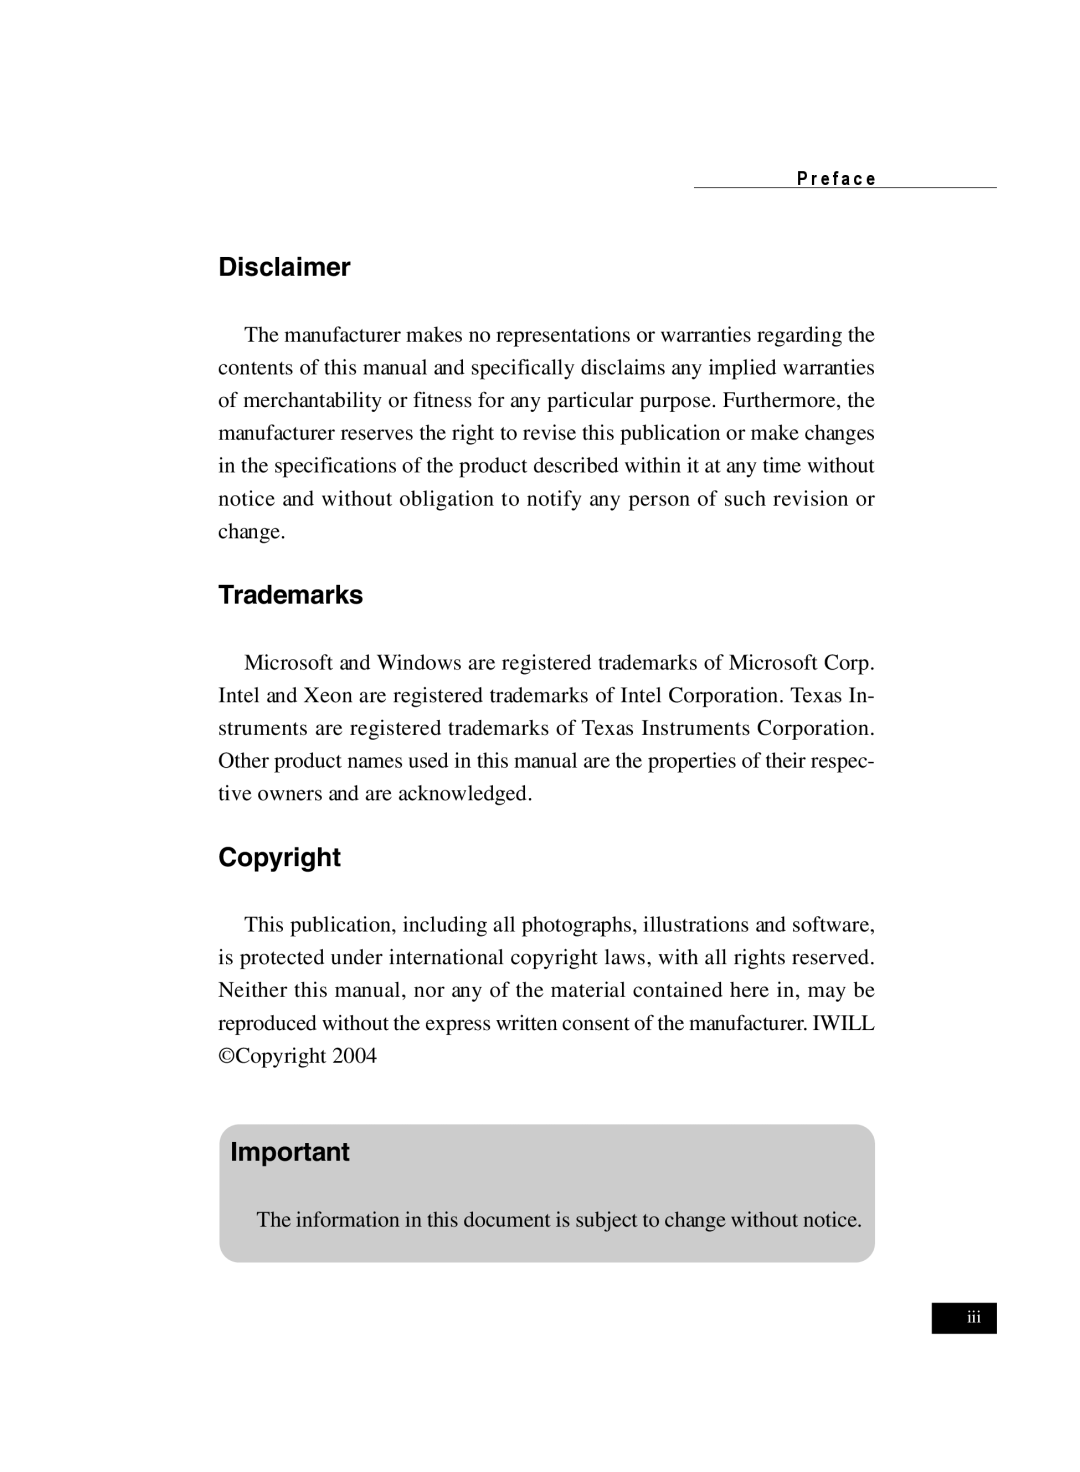 IBM DJ800 user manual Disclaimer, Trademarks, Copyright 